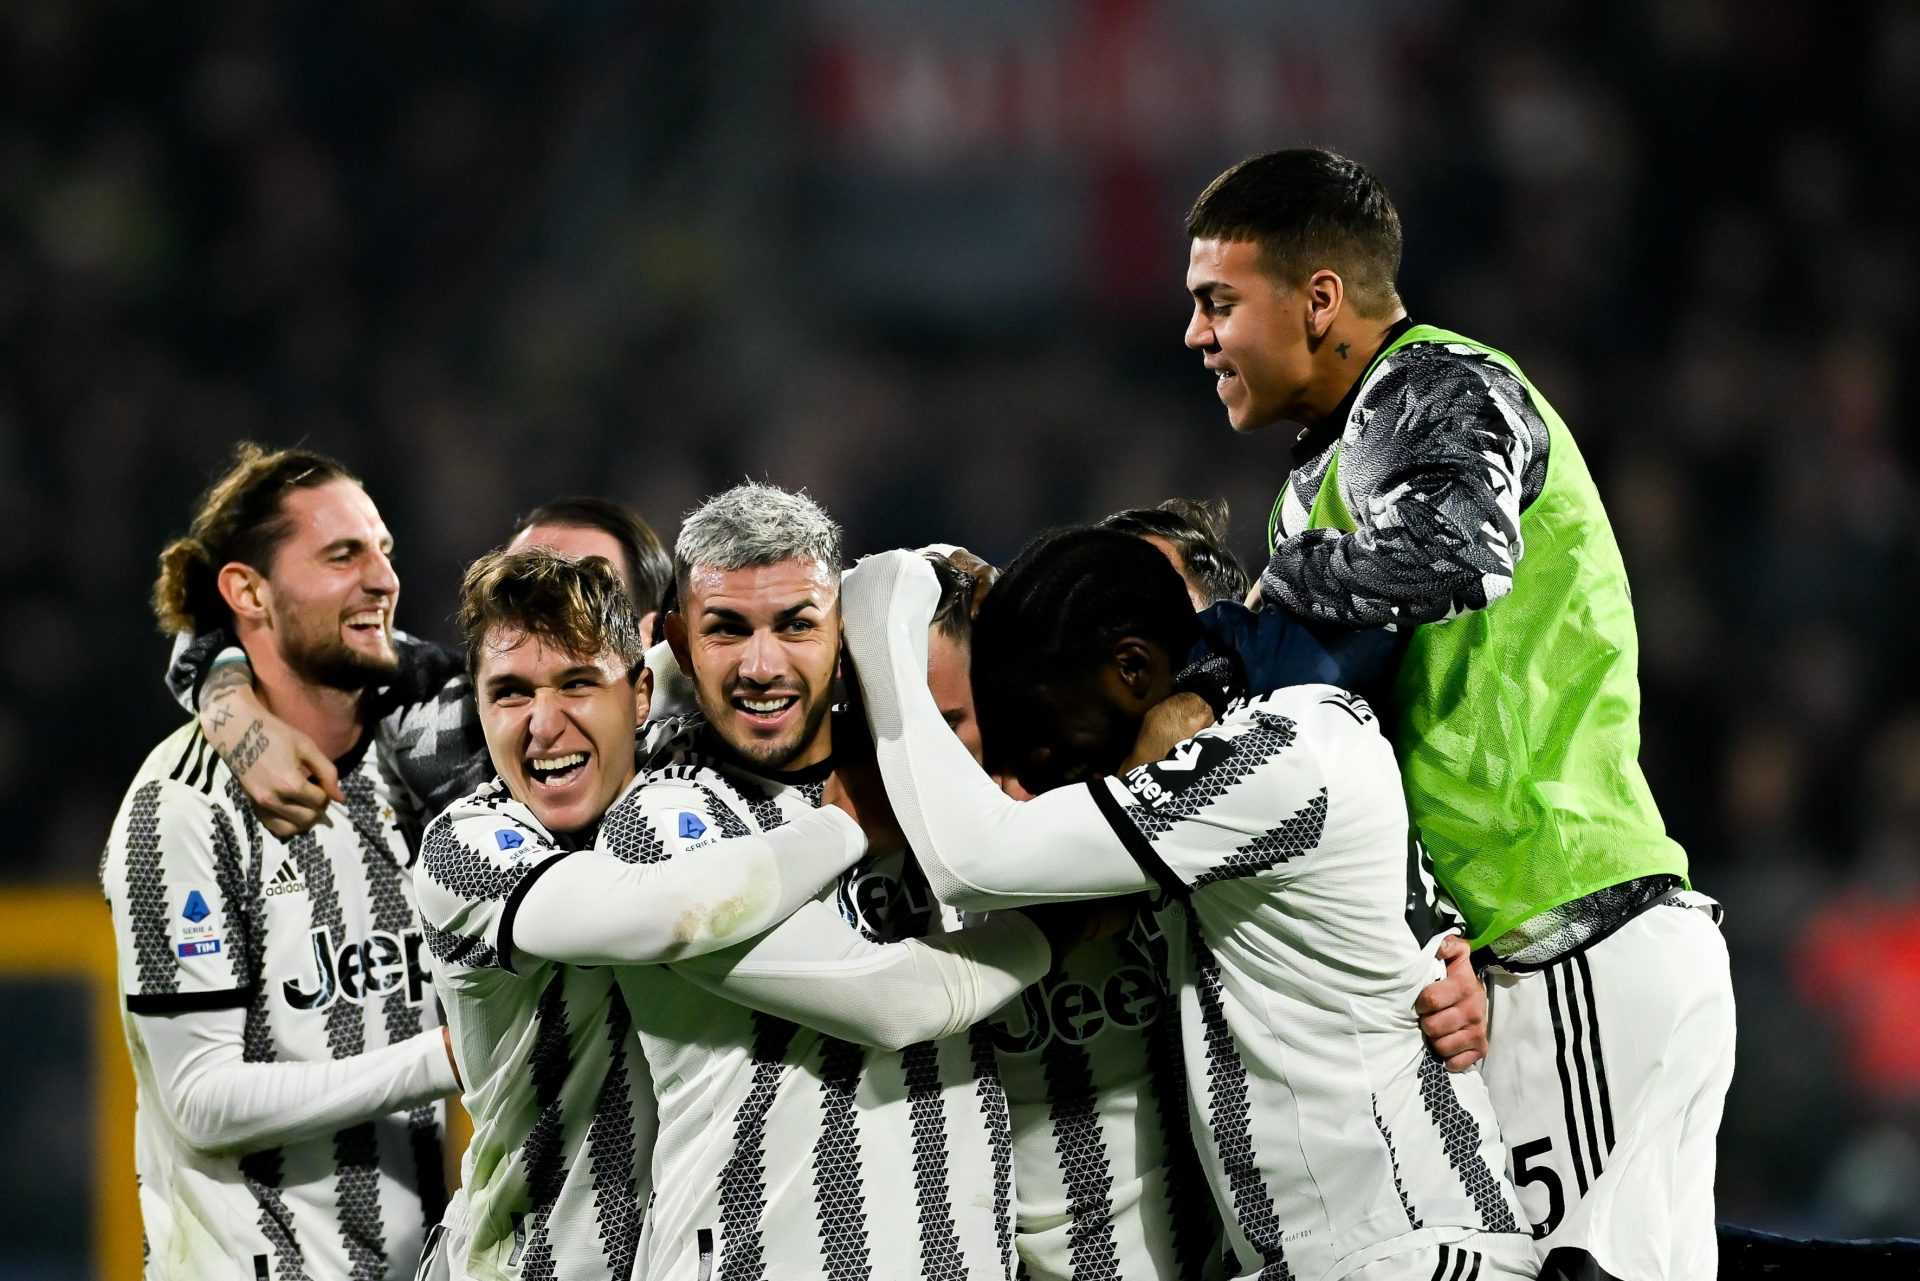 Juventus-Napoli (0-1), Allegri: “Potevamo far meglio sul gol”